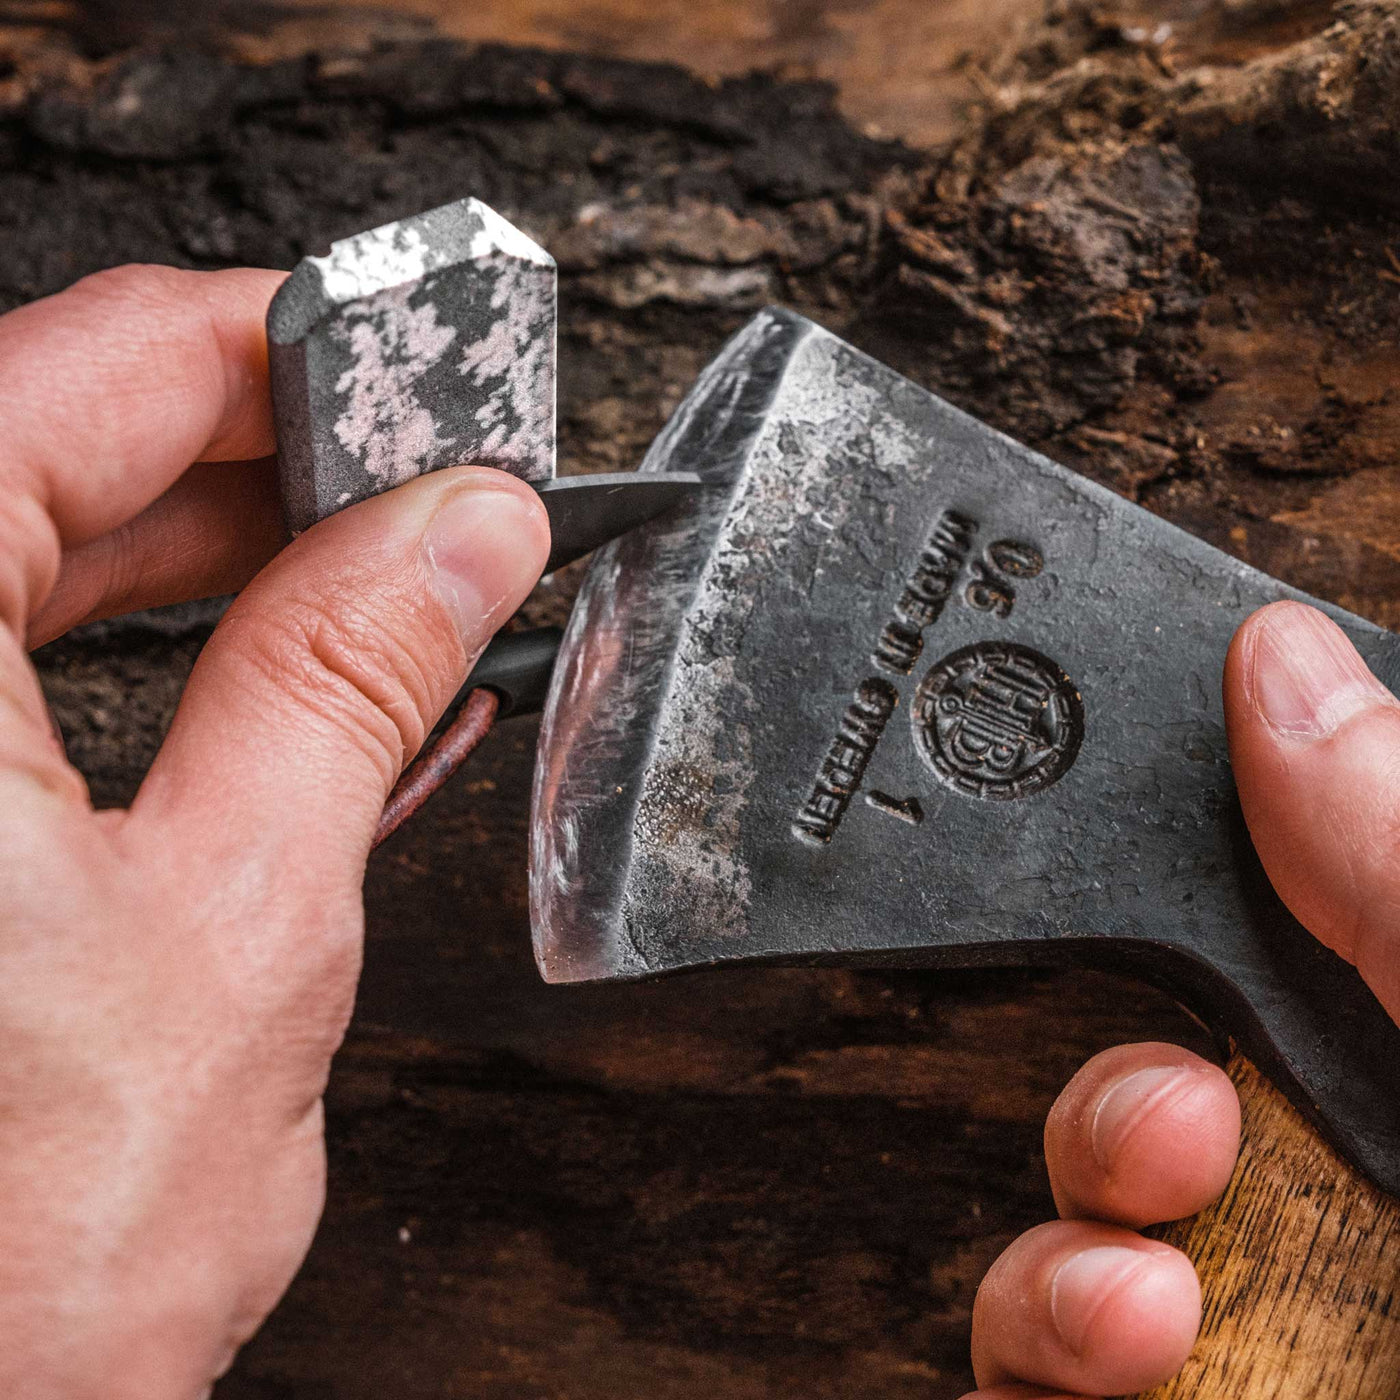 The viking spark ceramic scraper used to deburr a Hults Bruk axe